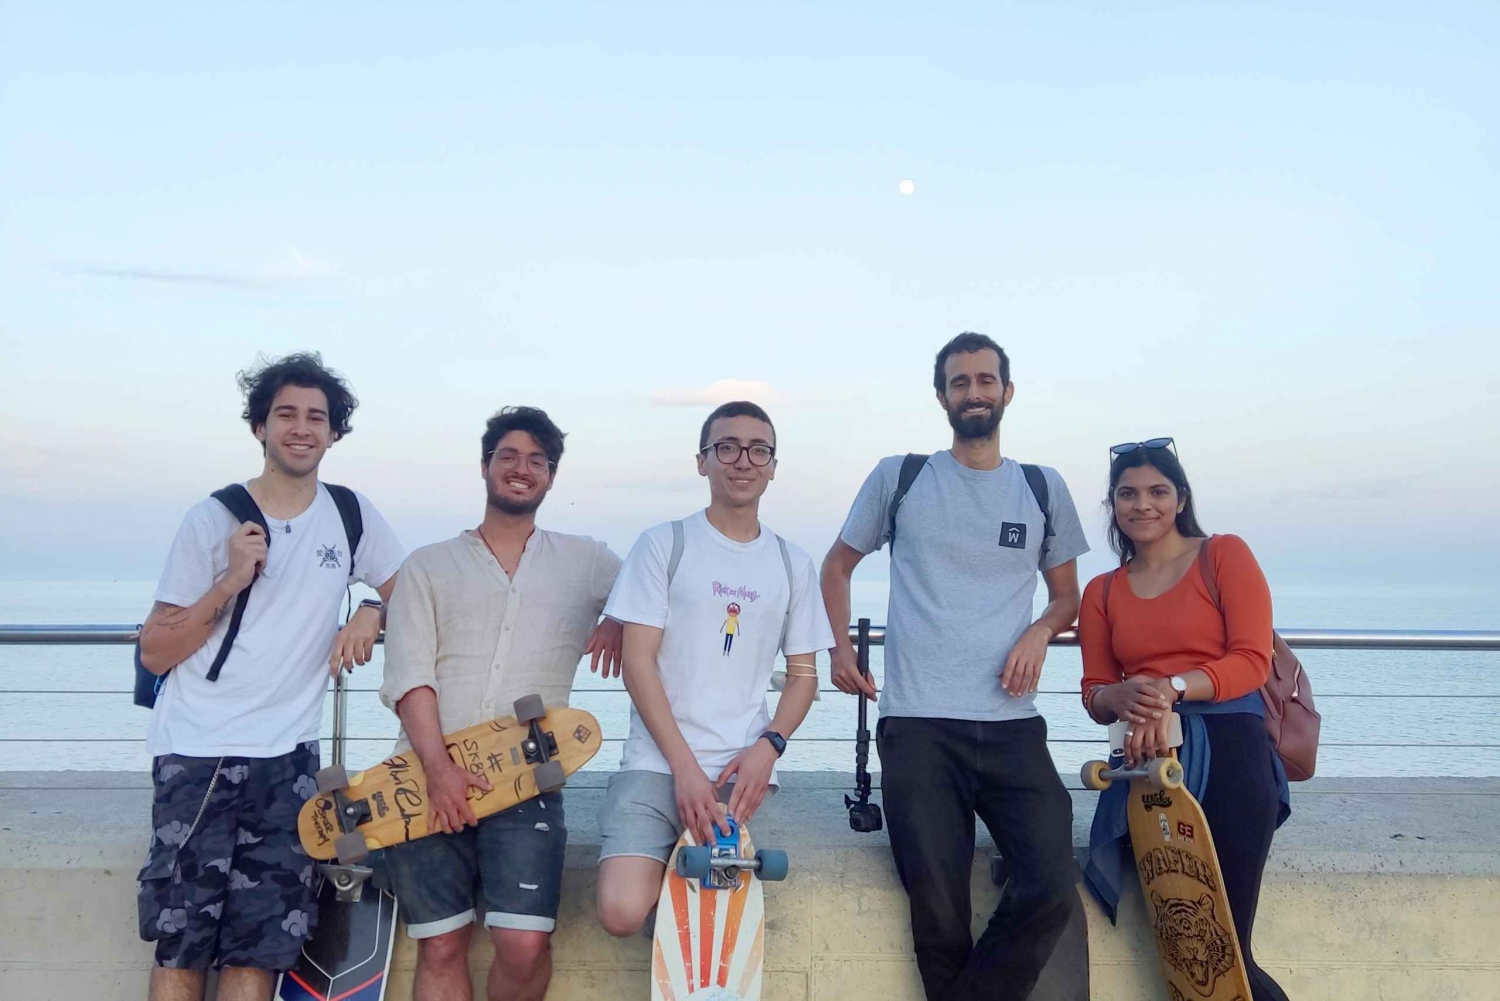 Tour de skate y longboard en Barcelona - La Capital del Skate